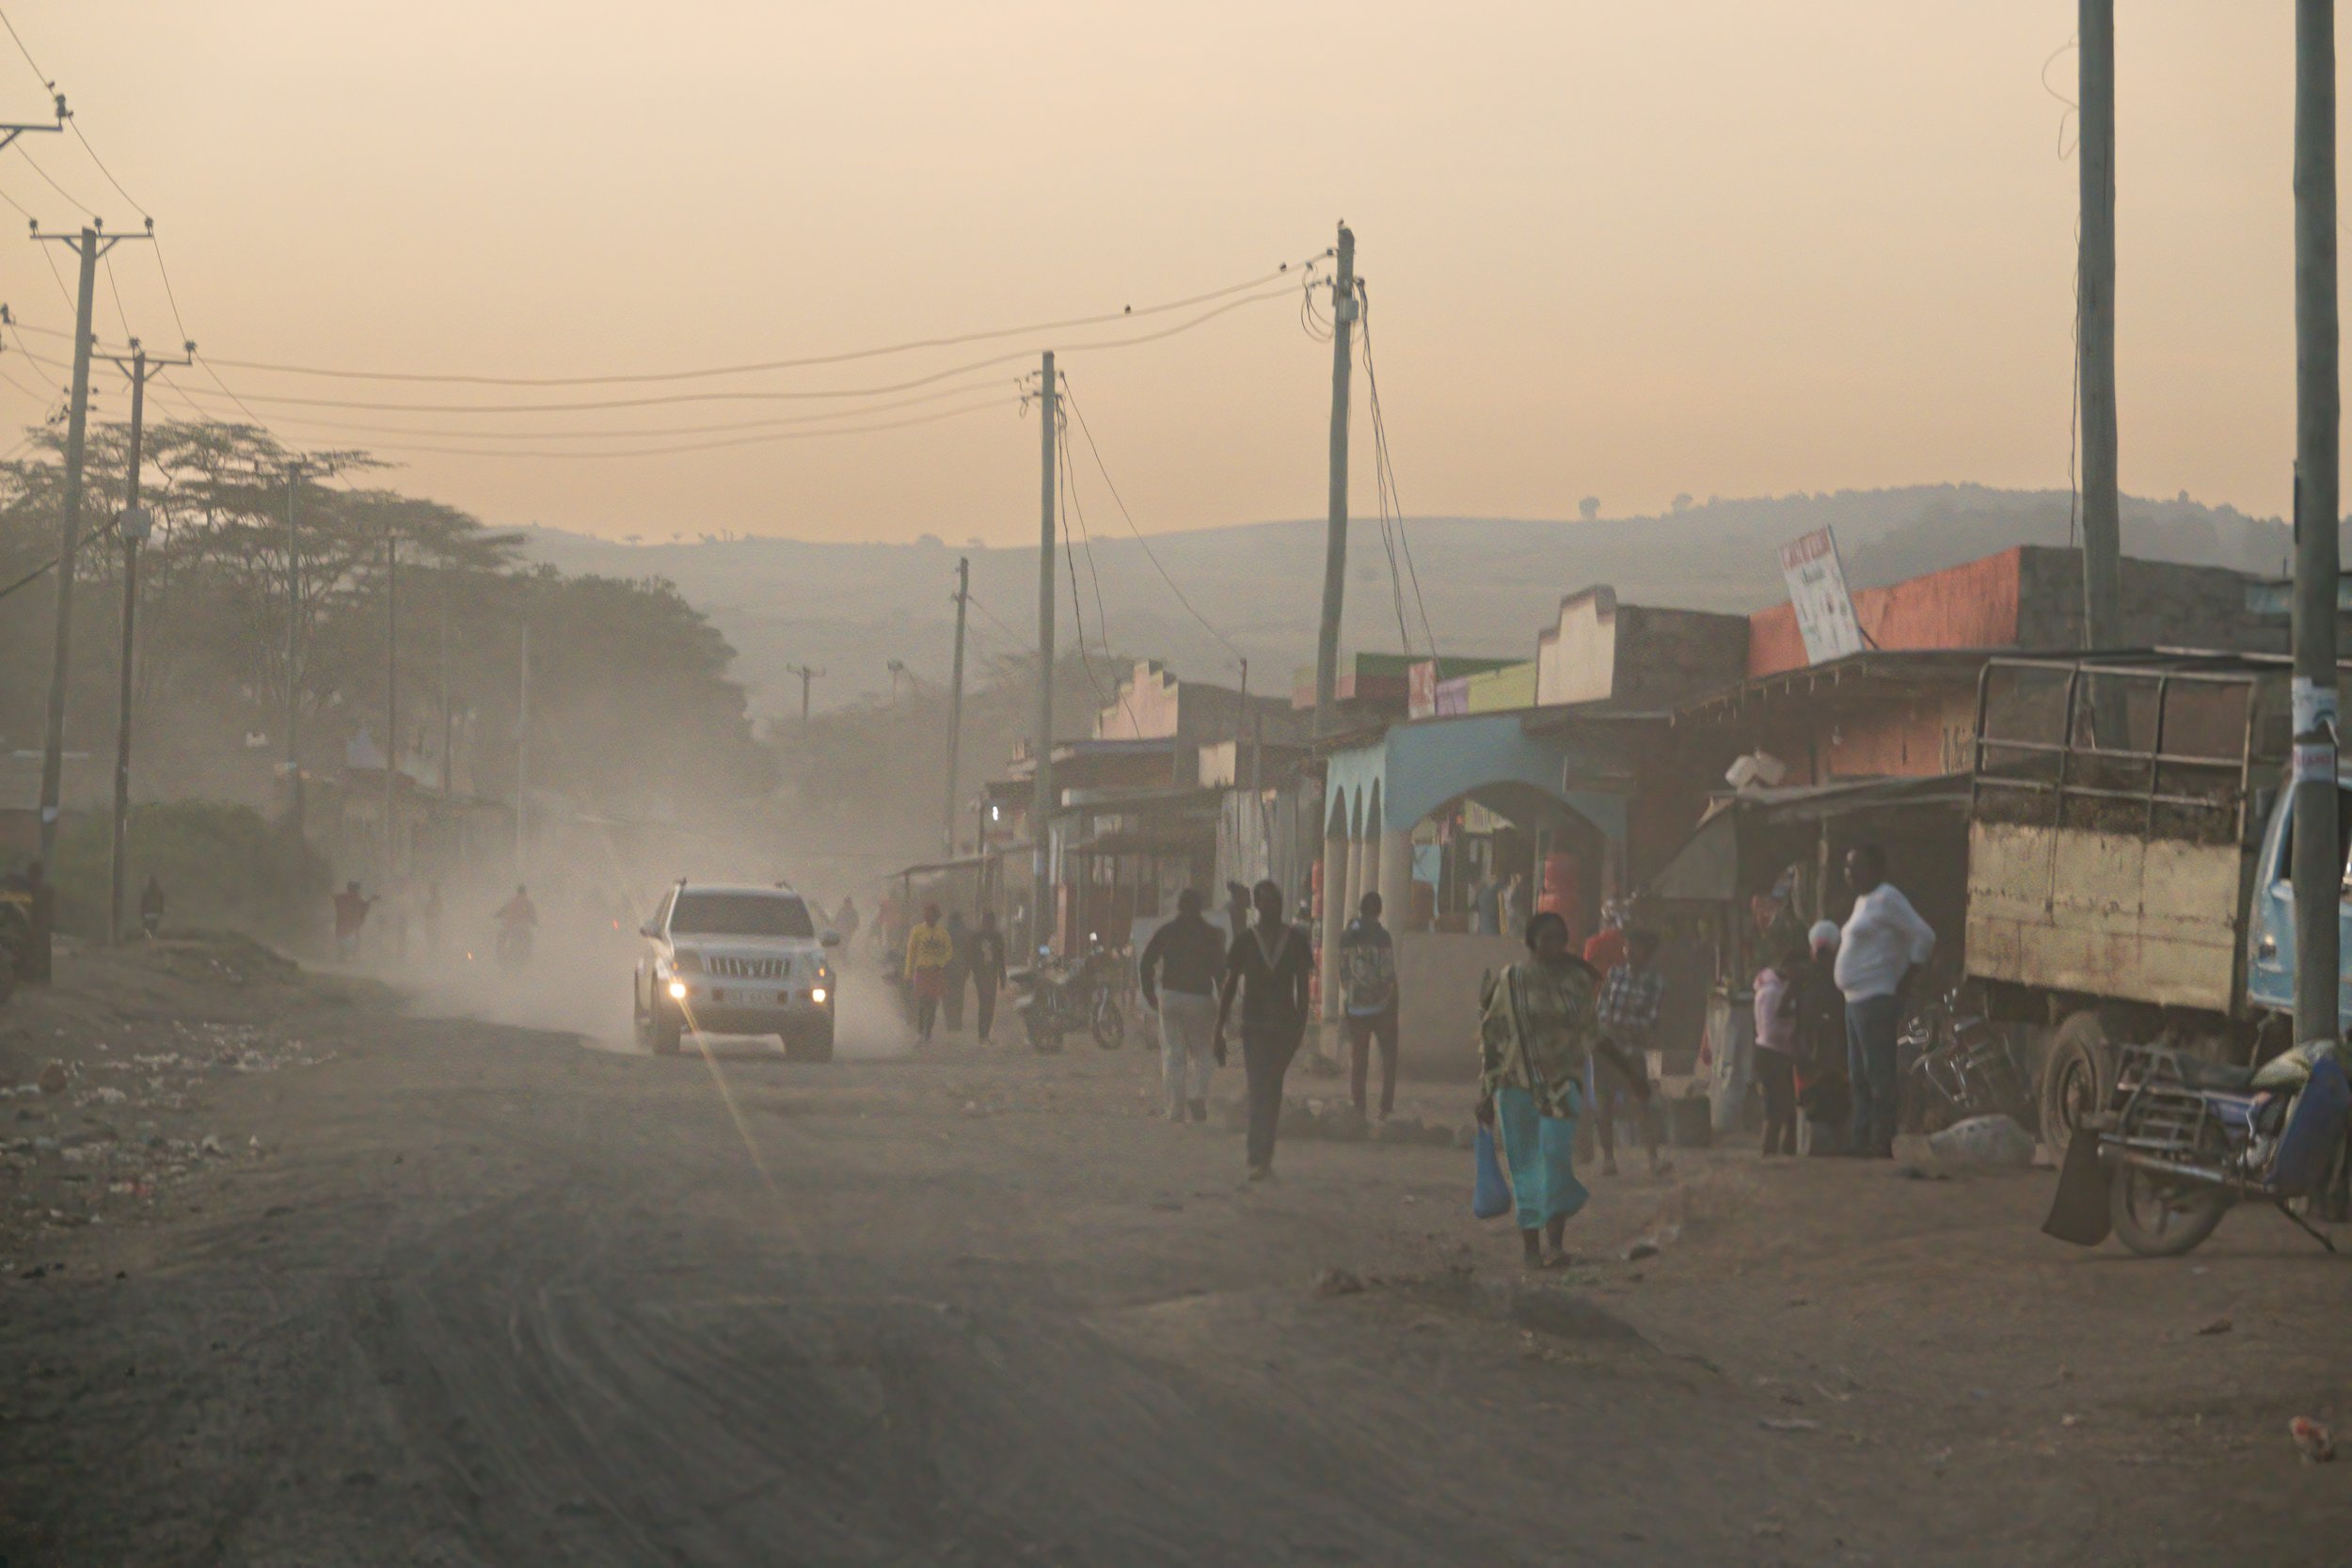 January heat and dust in Ndabibi village